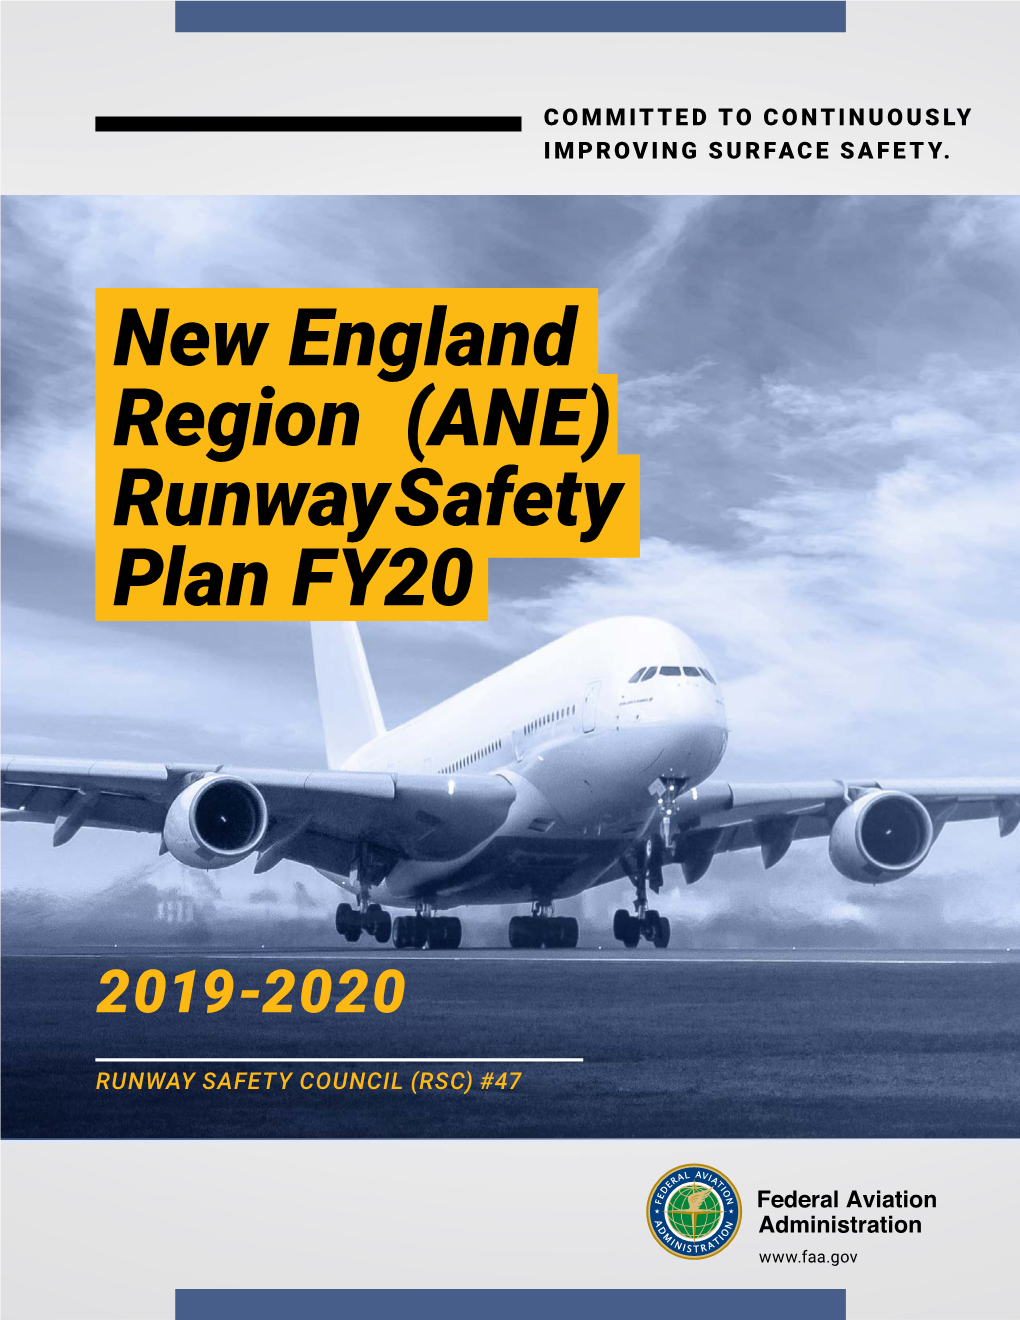 New England Region (ANE) Runway Safety Plan, FY 2020